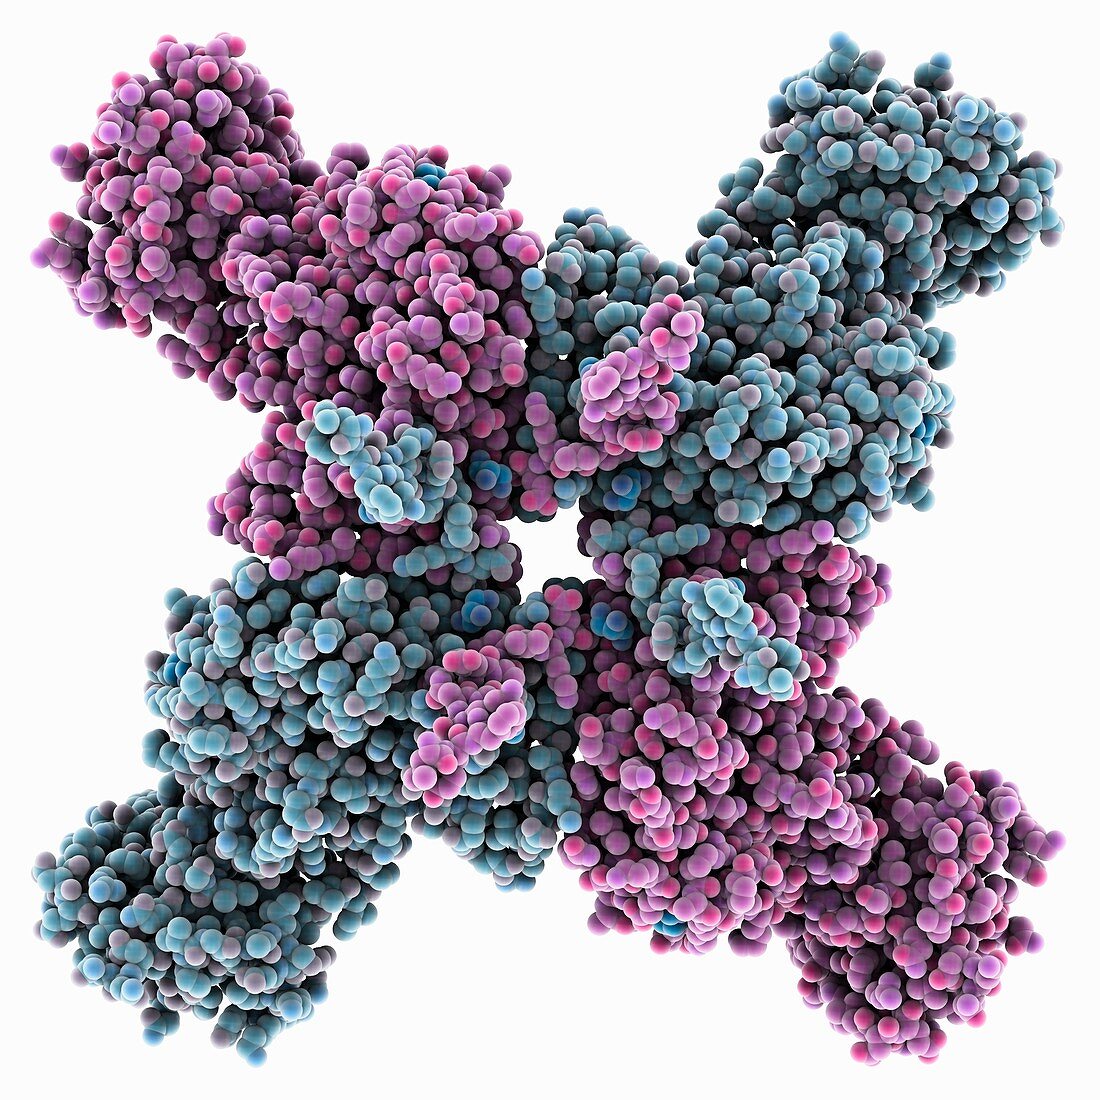 Anthrax IMPDH molecule